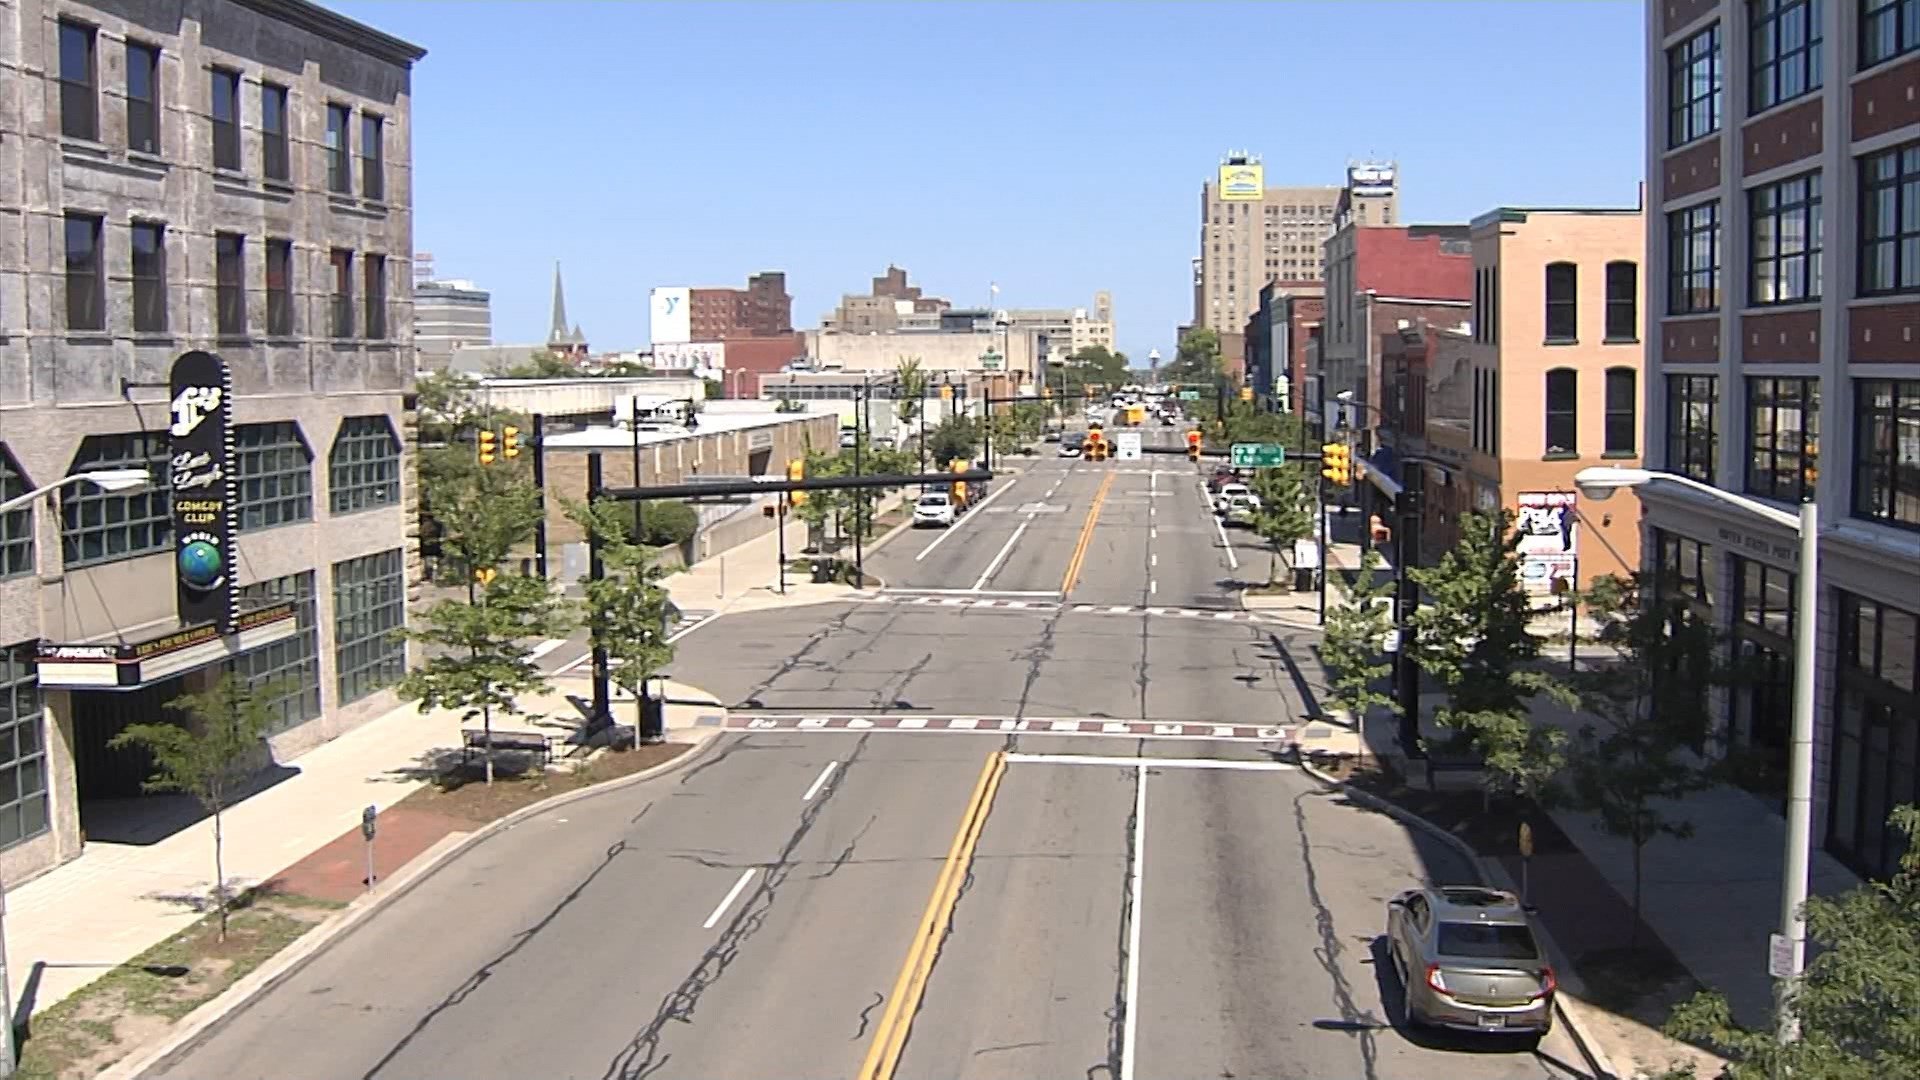 City of Erie's 12th Street Reimagined Study Seeks Public Input for Corridor Revitalization